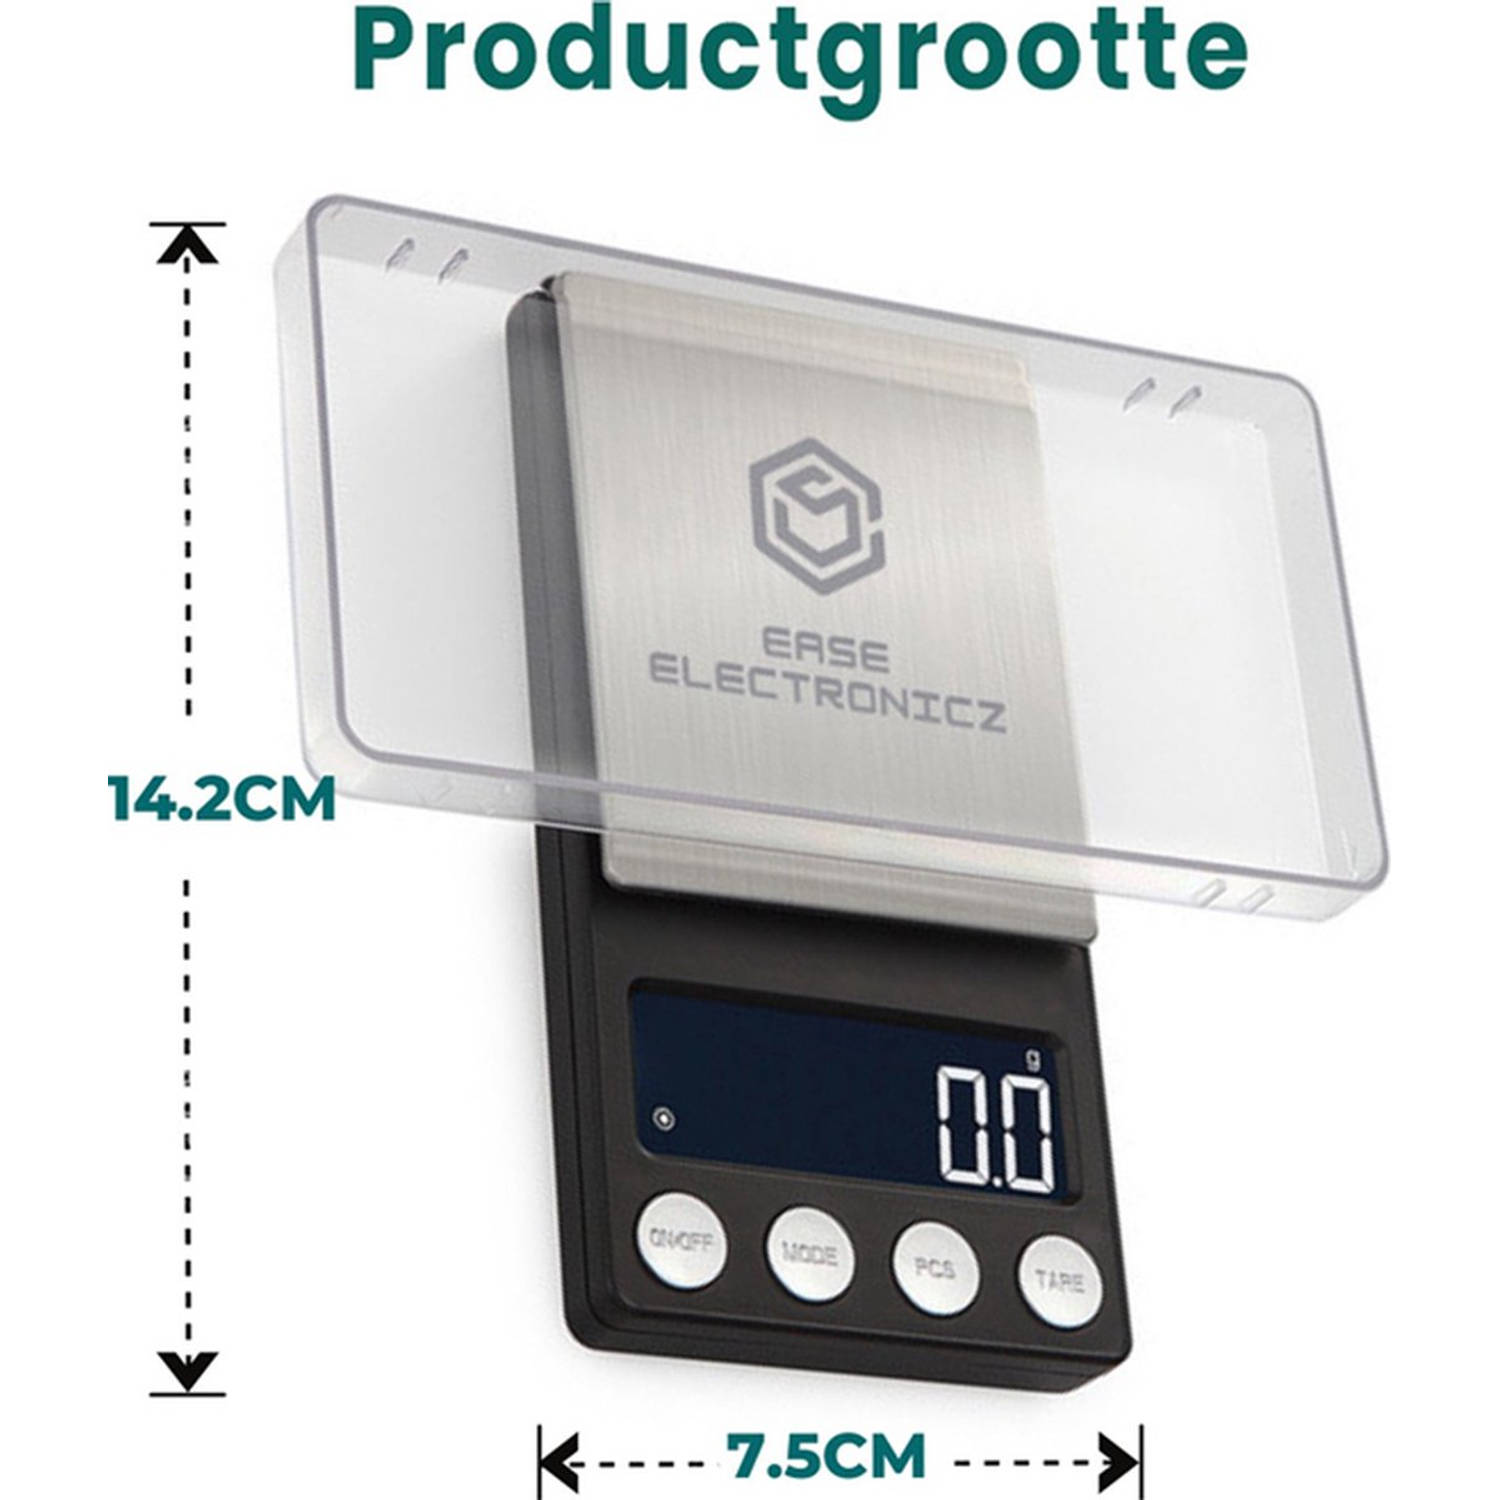 organiseren Rusteloosheid schommel Ease Electronicz digitale mini precisie keukenweegschaal - 0,01 tot 200 gram  - 14.2 x 7.5 cm - pocket scale op batterij | Blokker